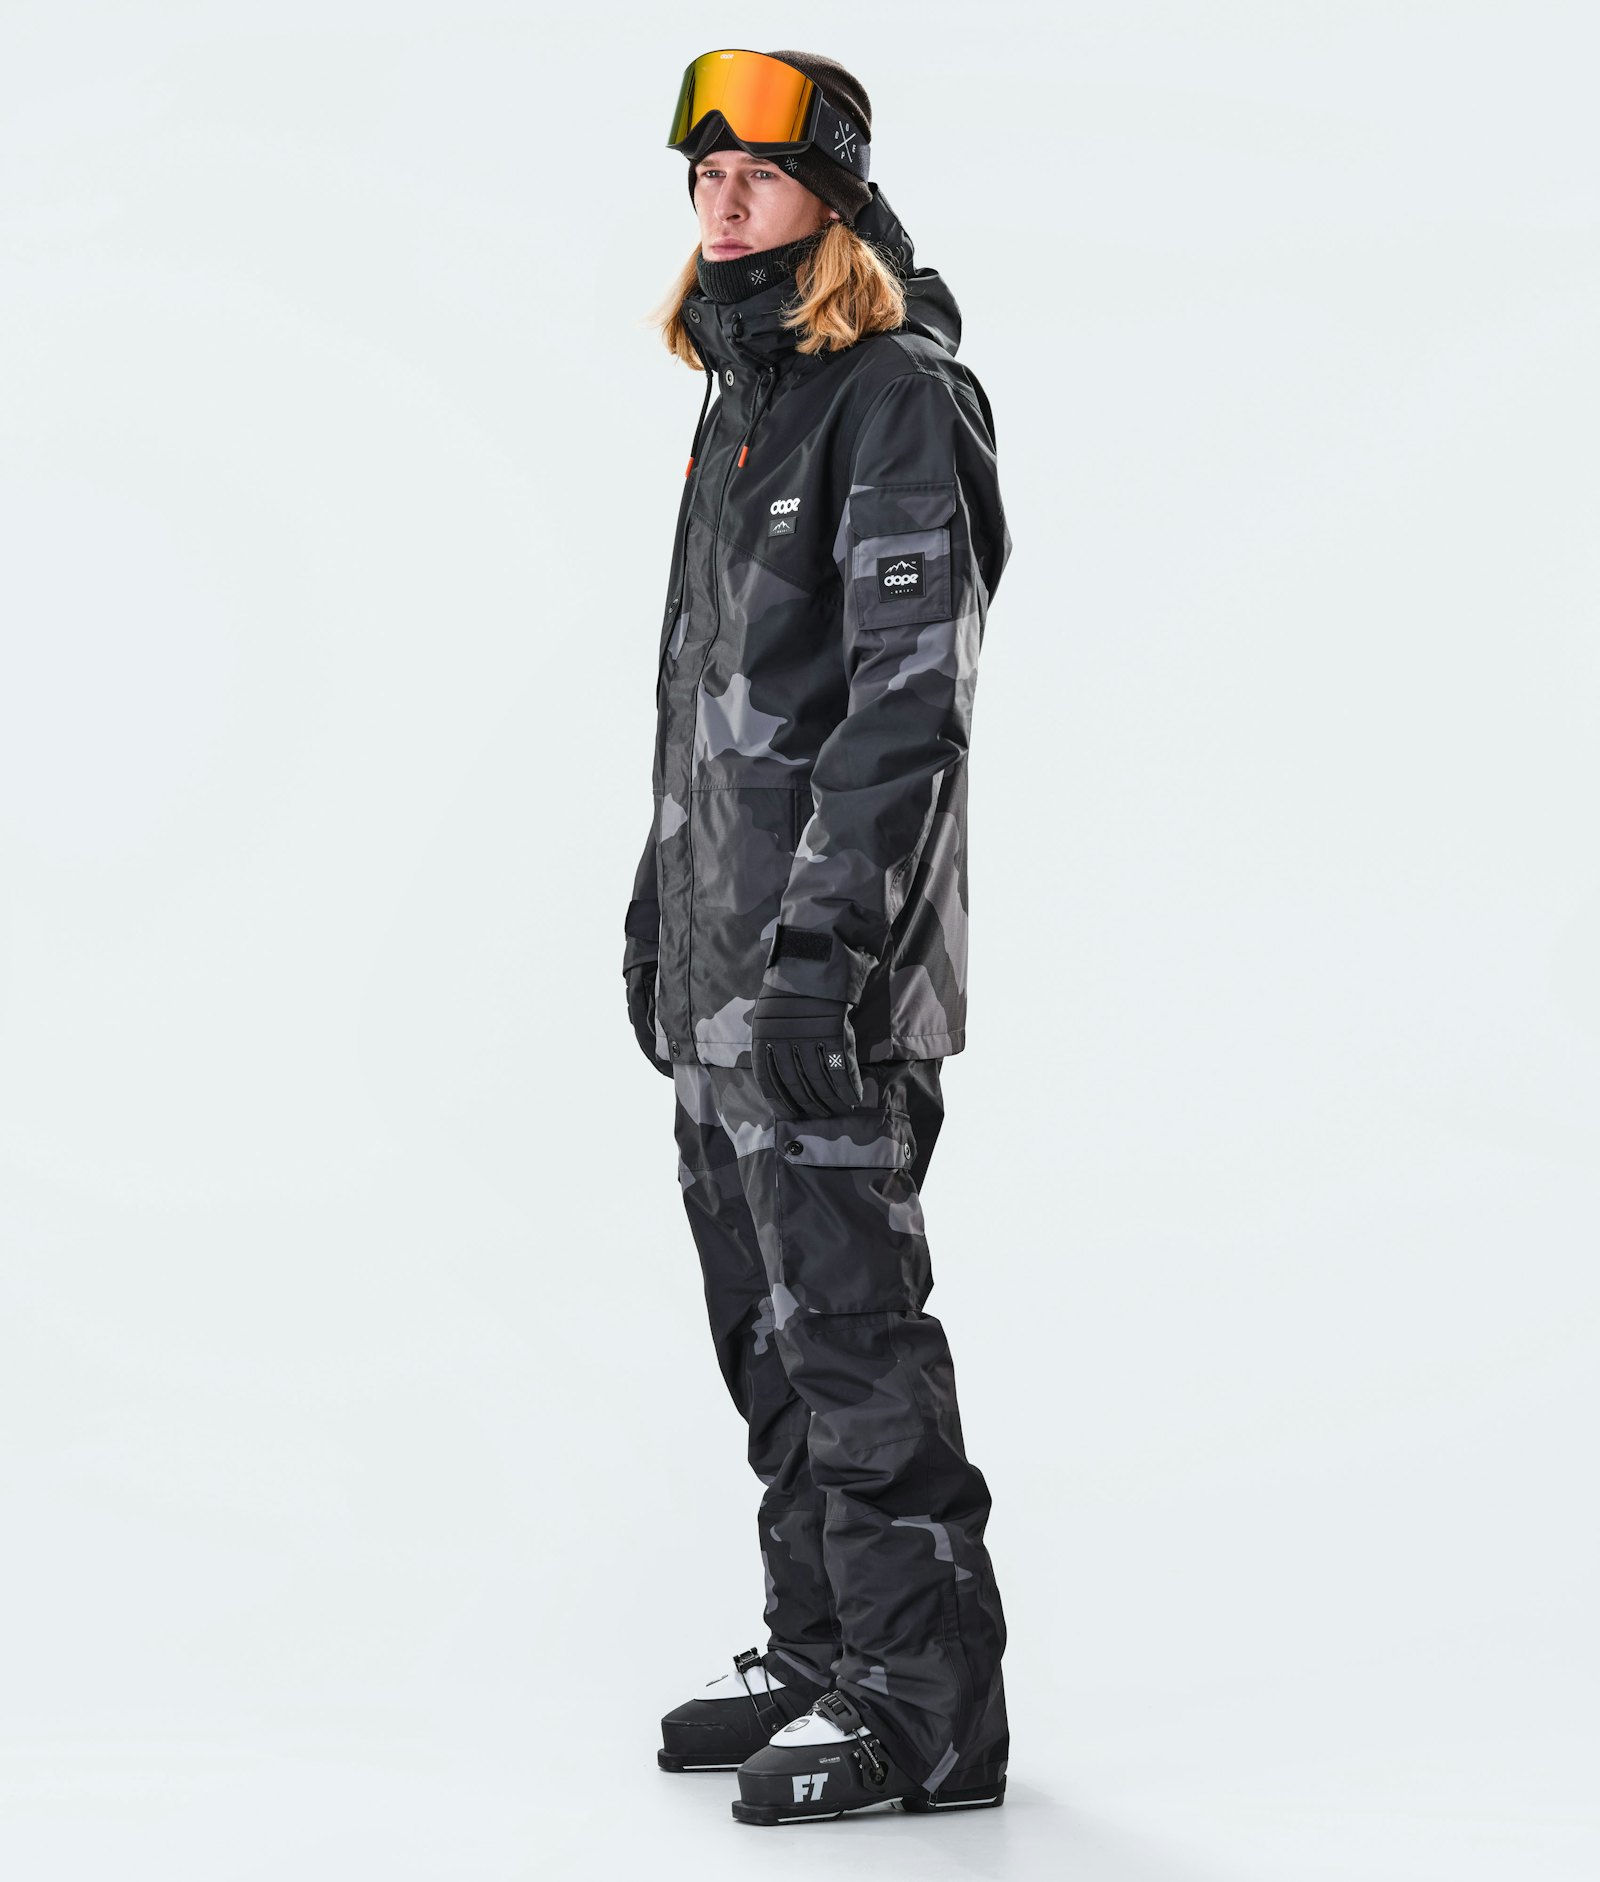 Adept 2020 Veste de Ski Homme Black/Black Camo